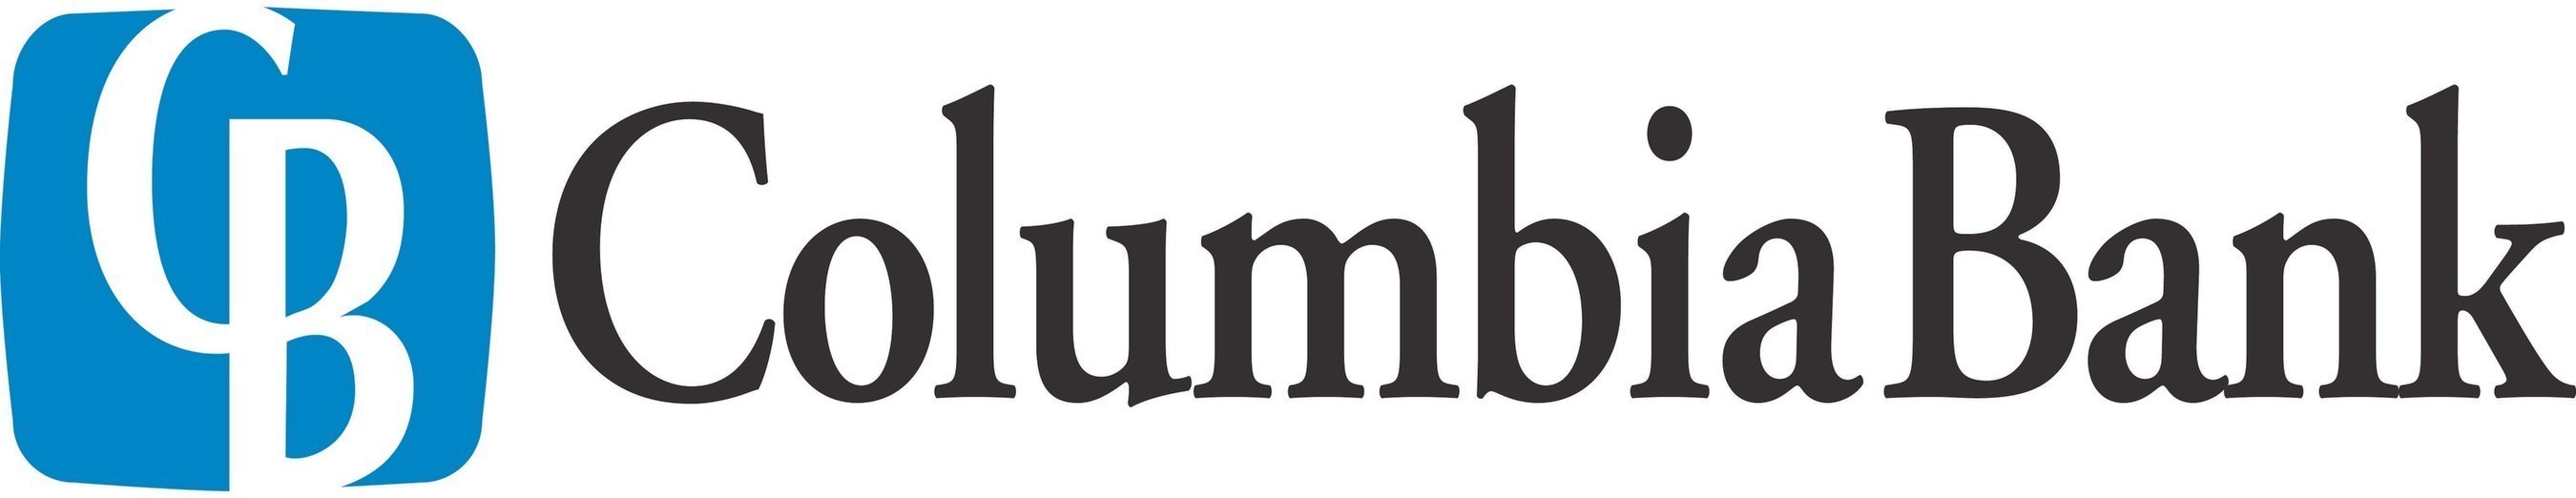 Columbia Bank logo.